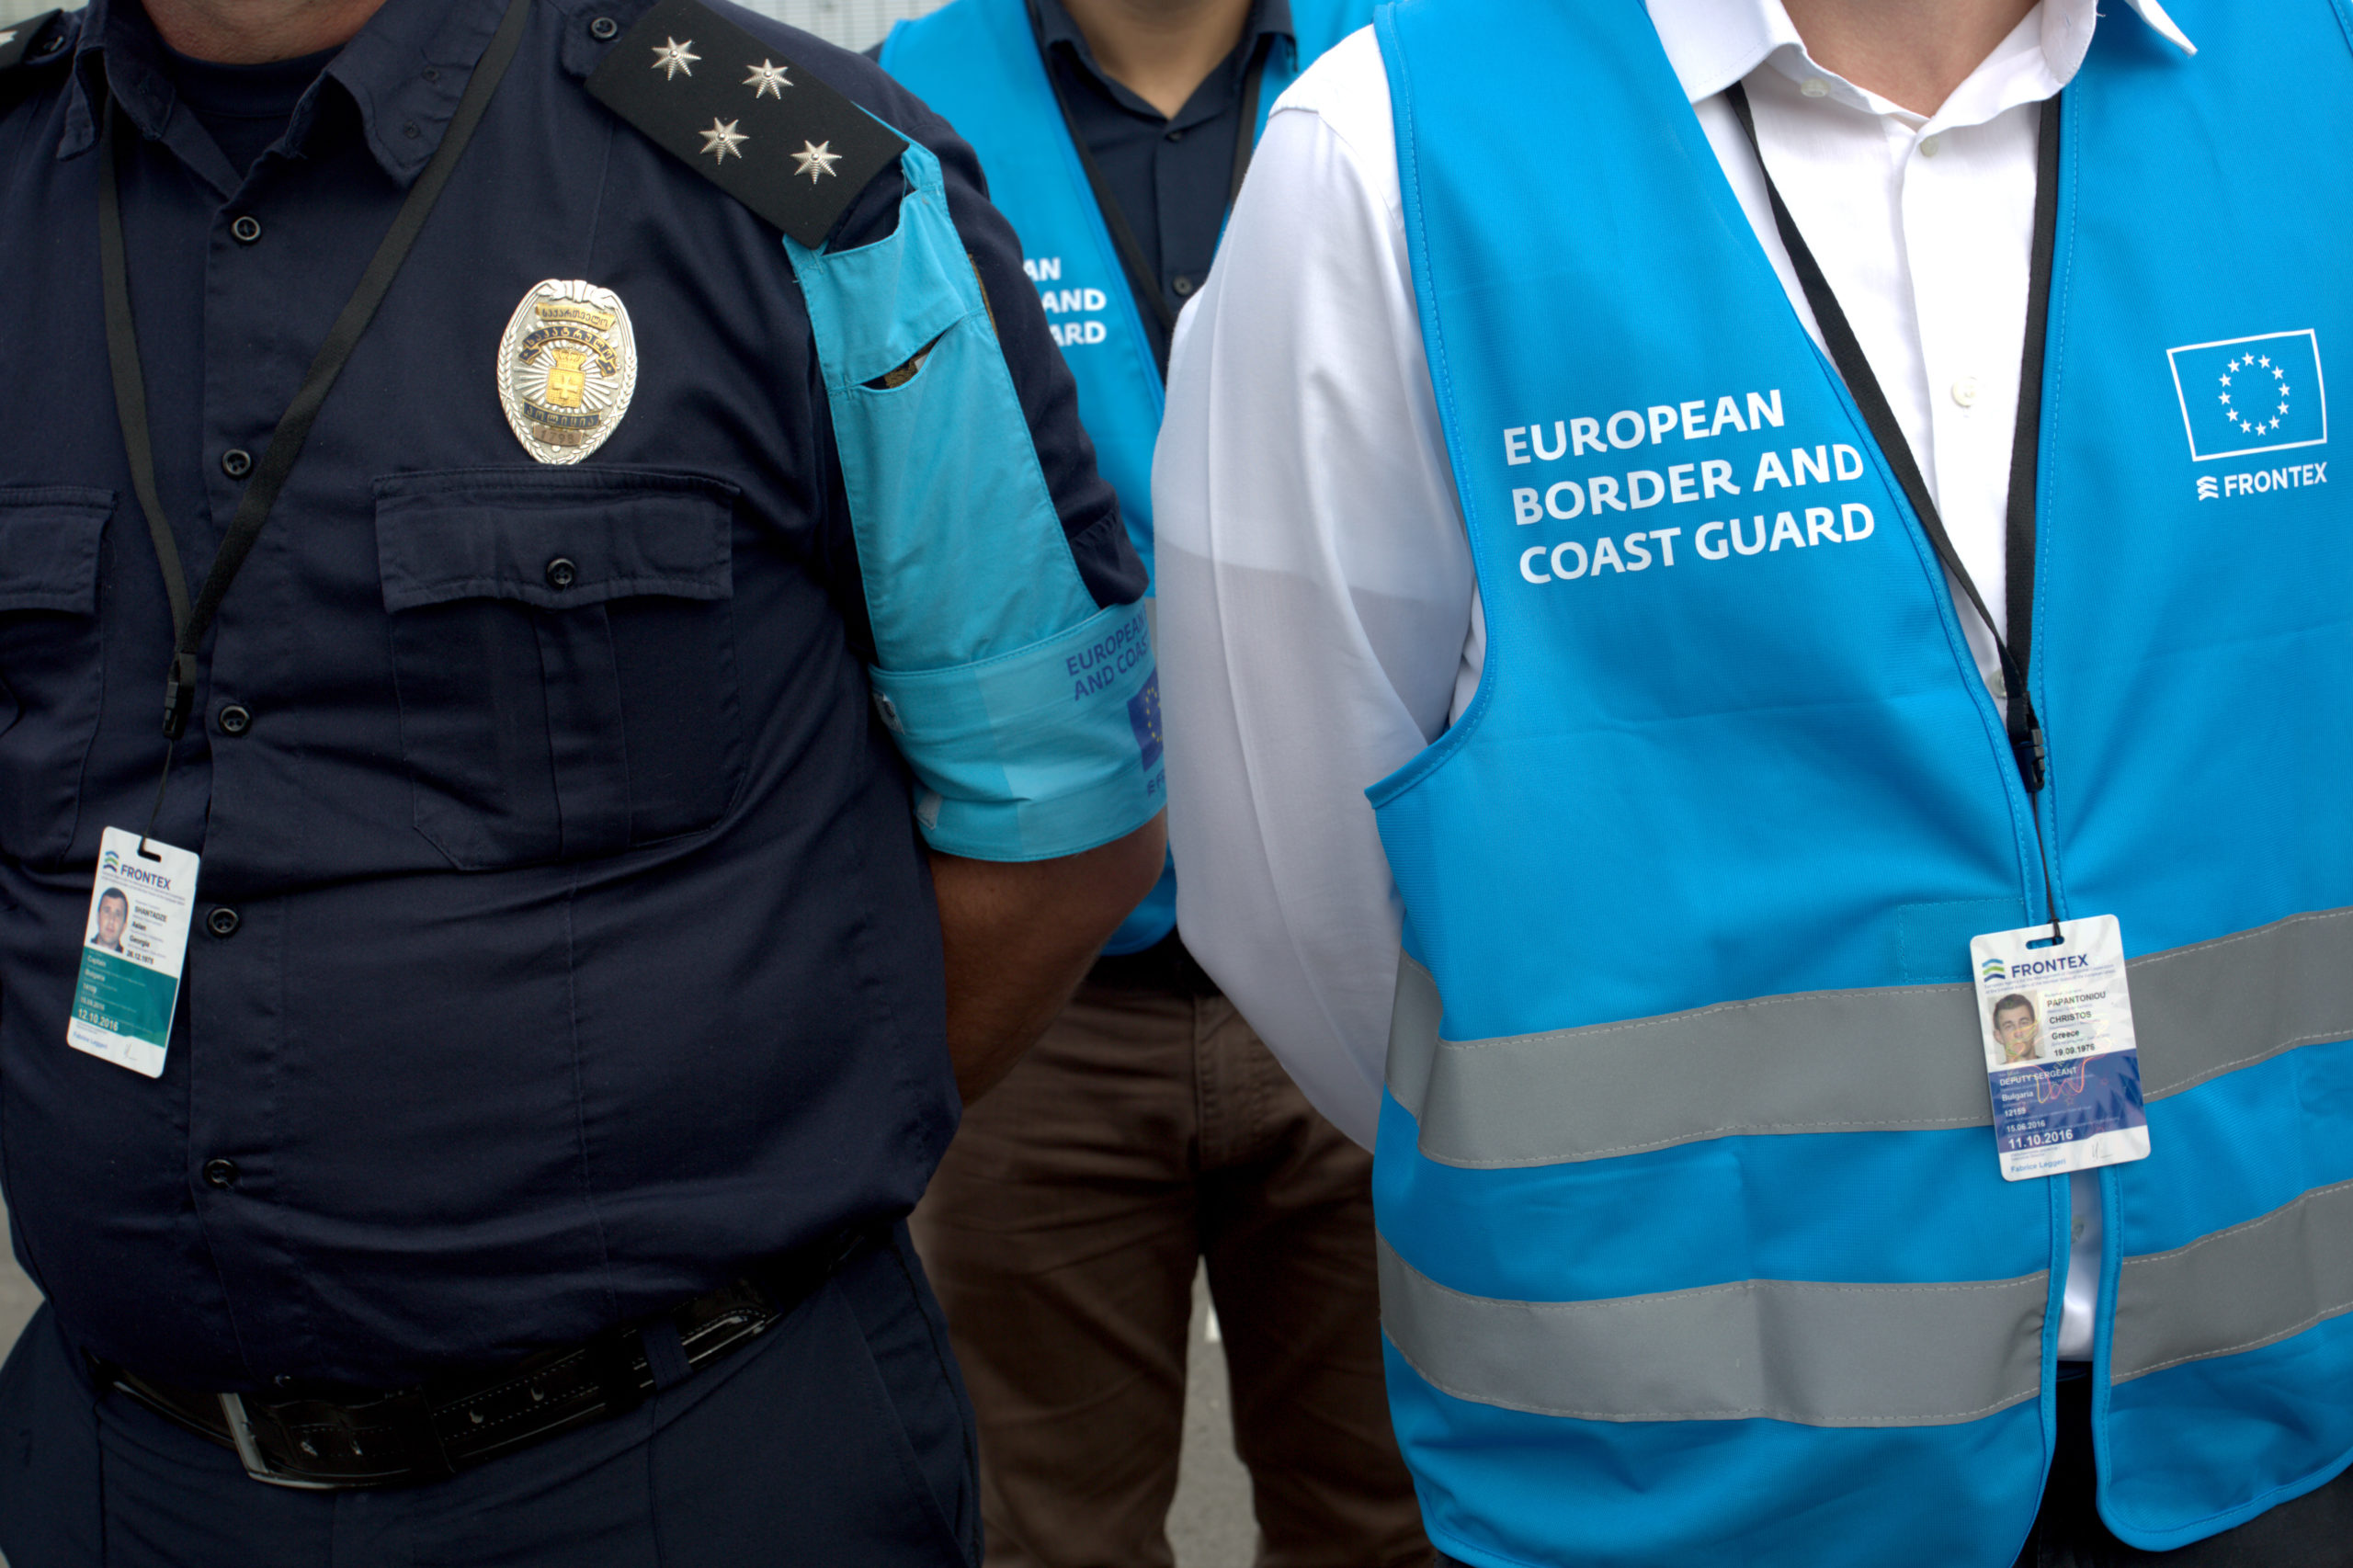 Ombudsman lambastes Frontex over handling of human rights complaints